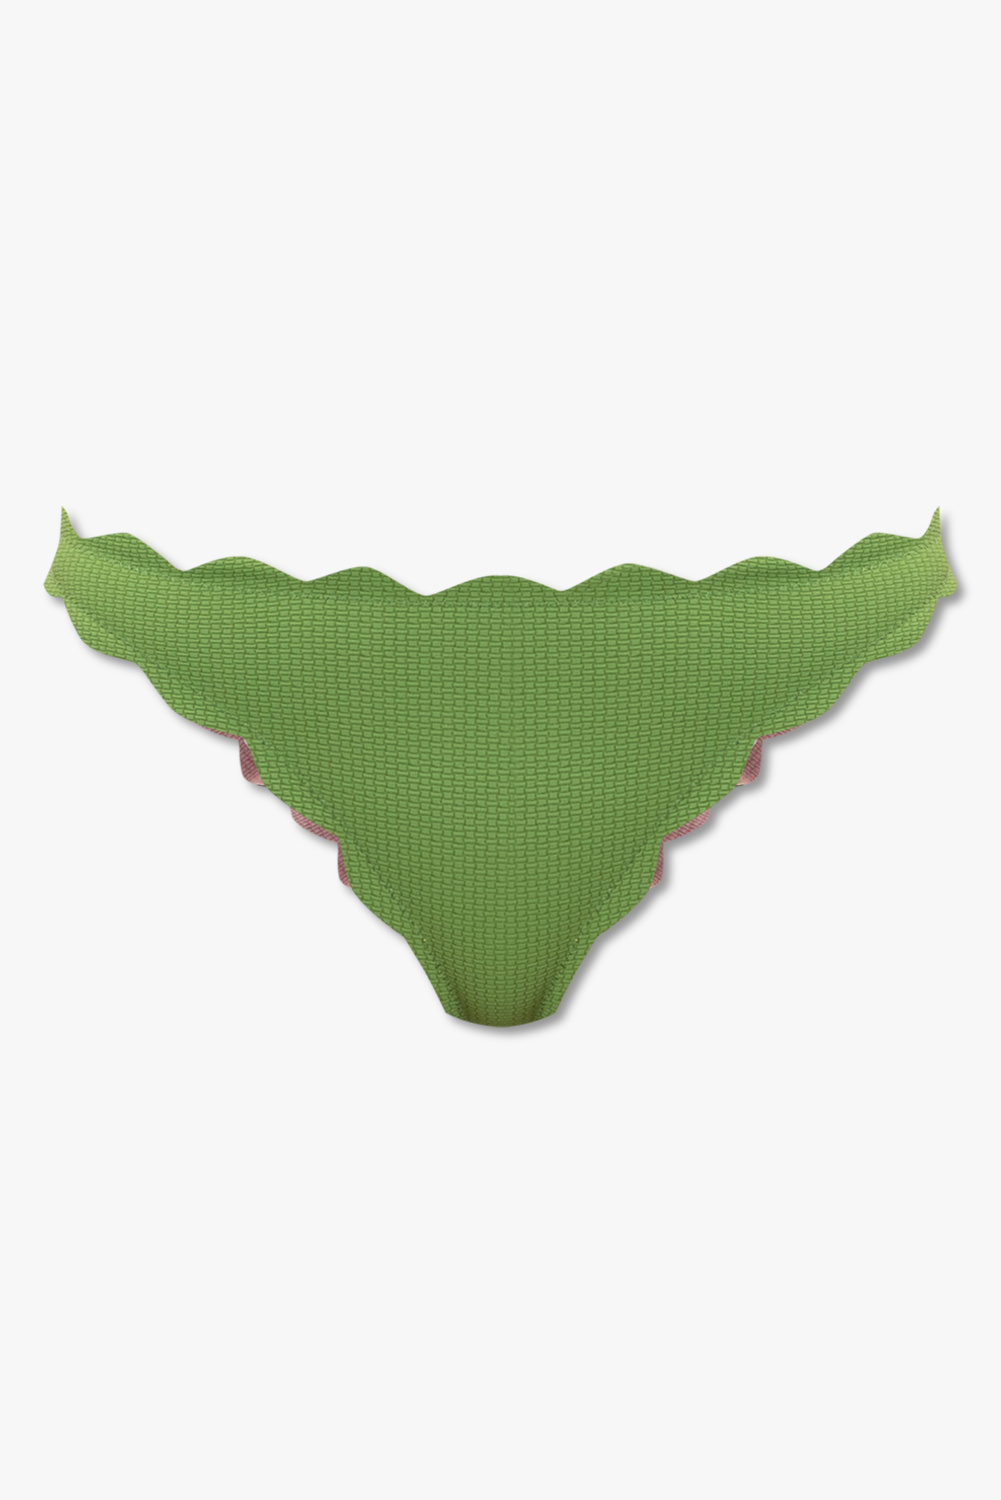 Marysia ‘North’ reversible swimsuit bottom